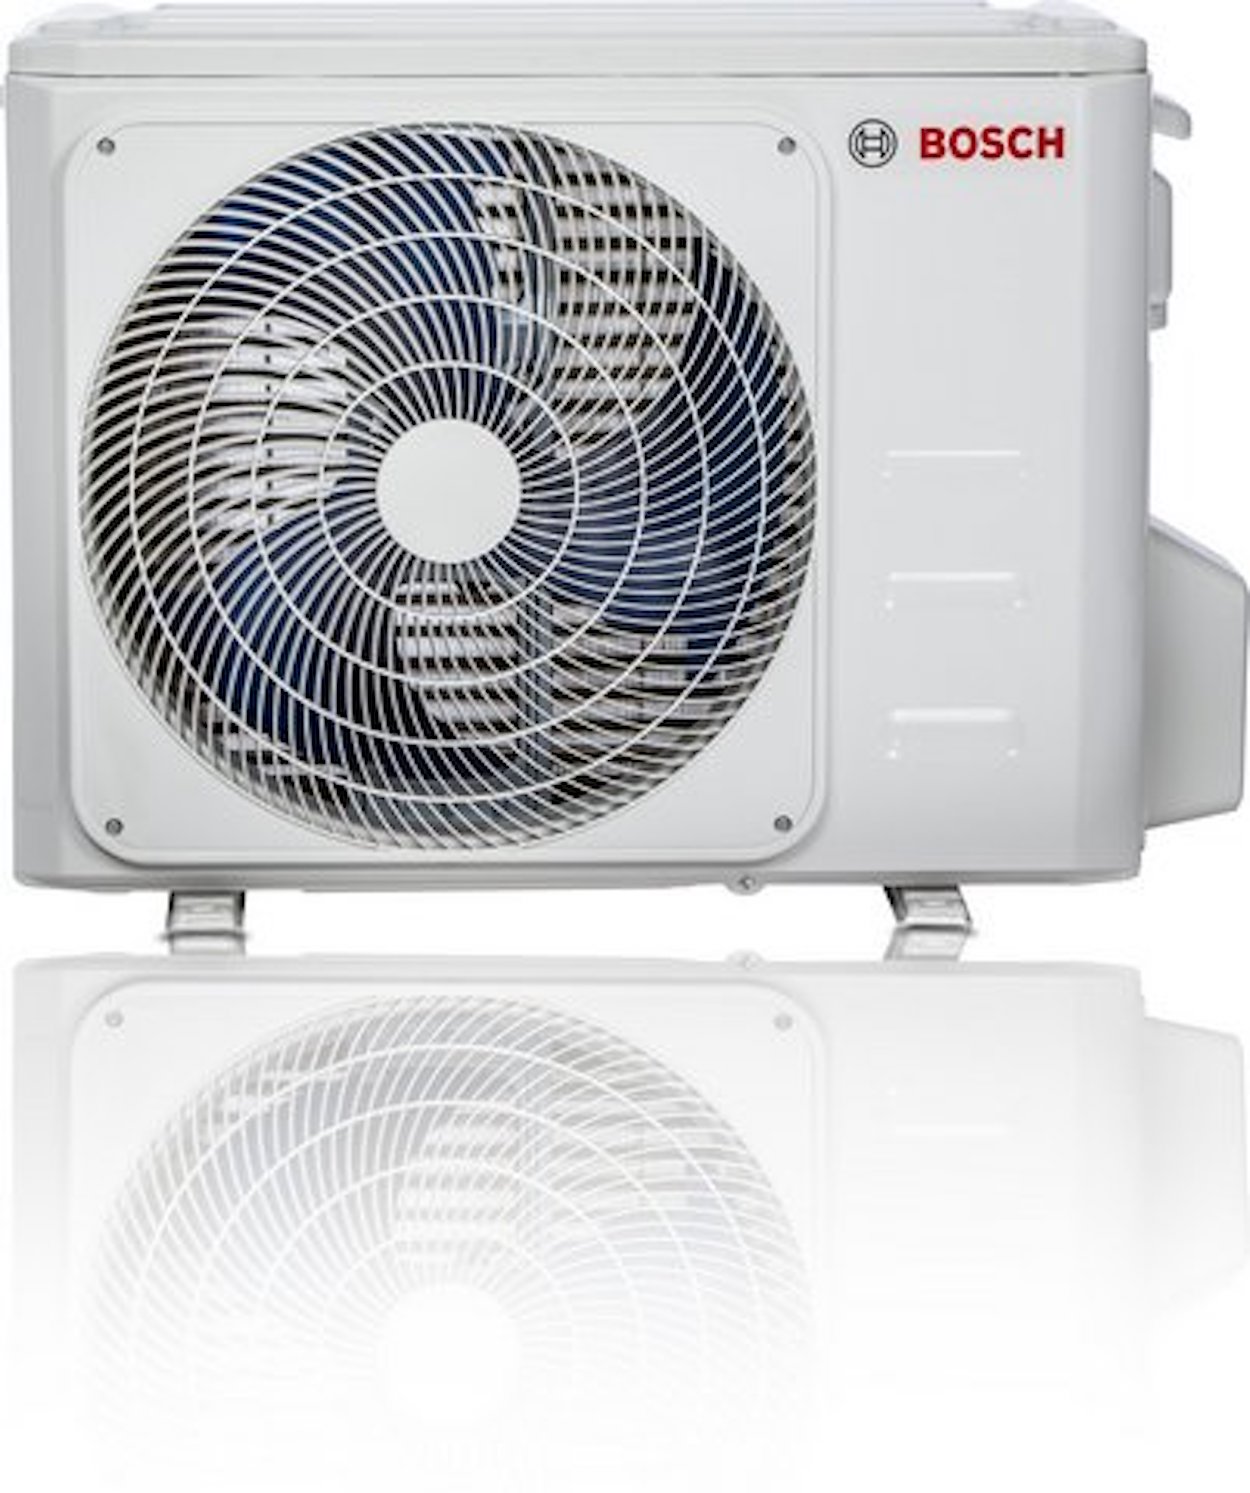 BOSCH Klimagerät CL5000 RAC 5,3-2 OUE Split Außeneinheit, 554x800x333, 5,3 kW